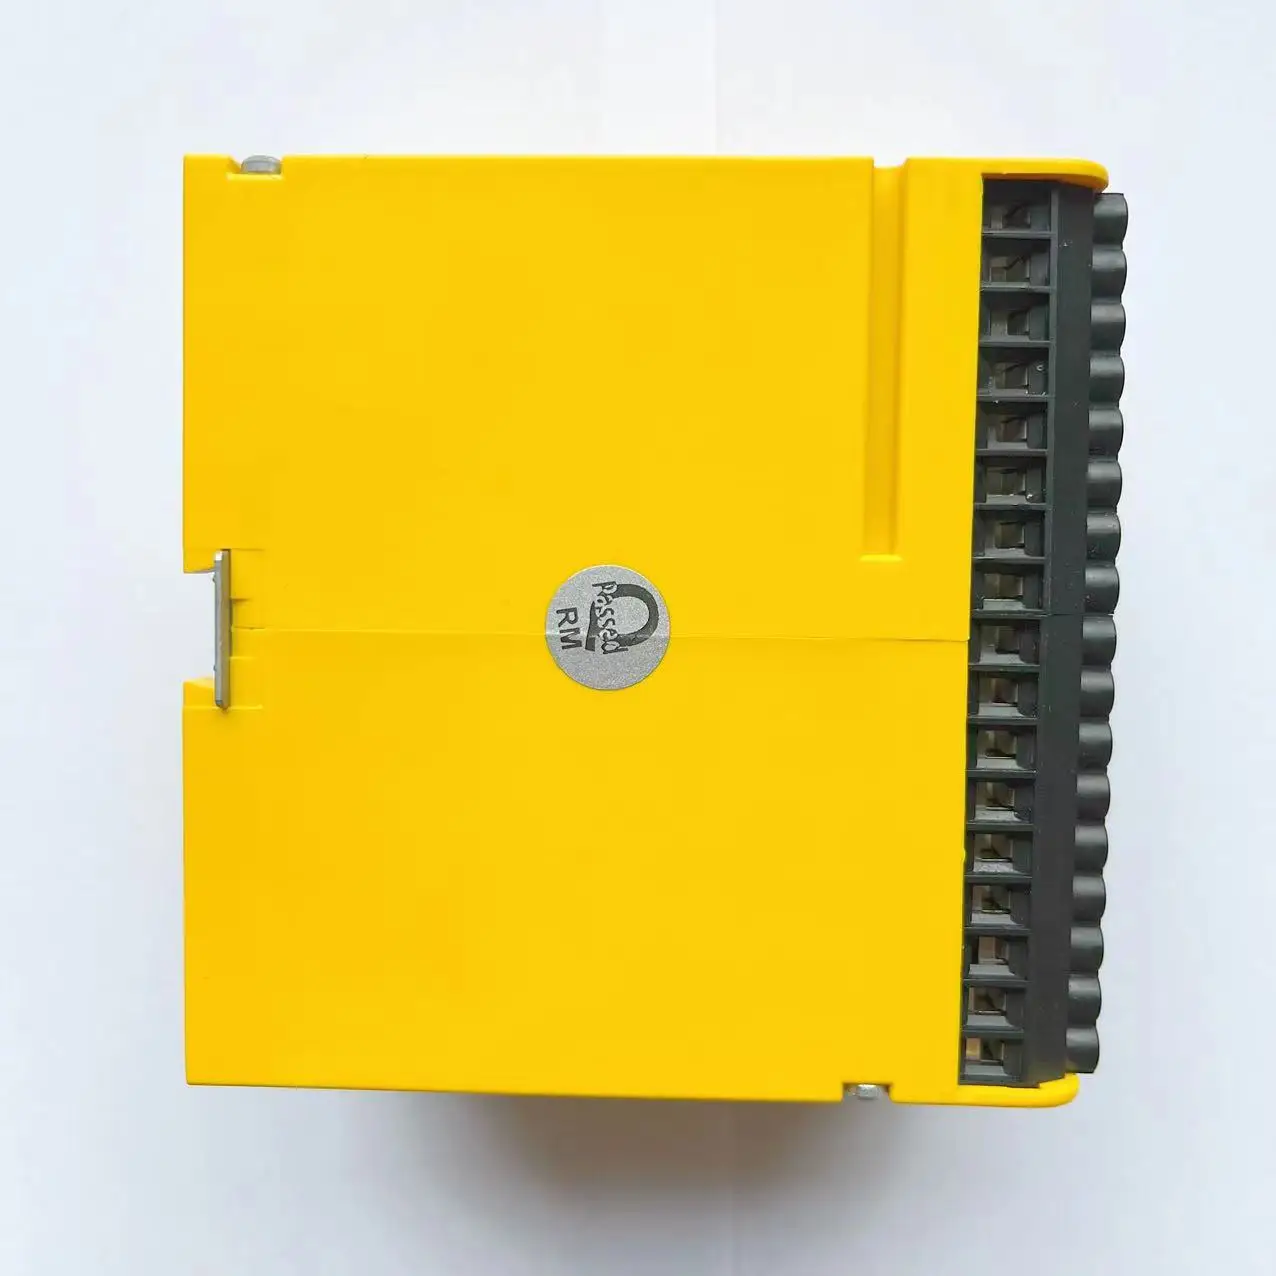 high-quality-insulation-monitor-e-isom527-ad01-insulation-detector-buy-insulation-monitoring